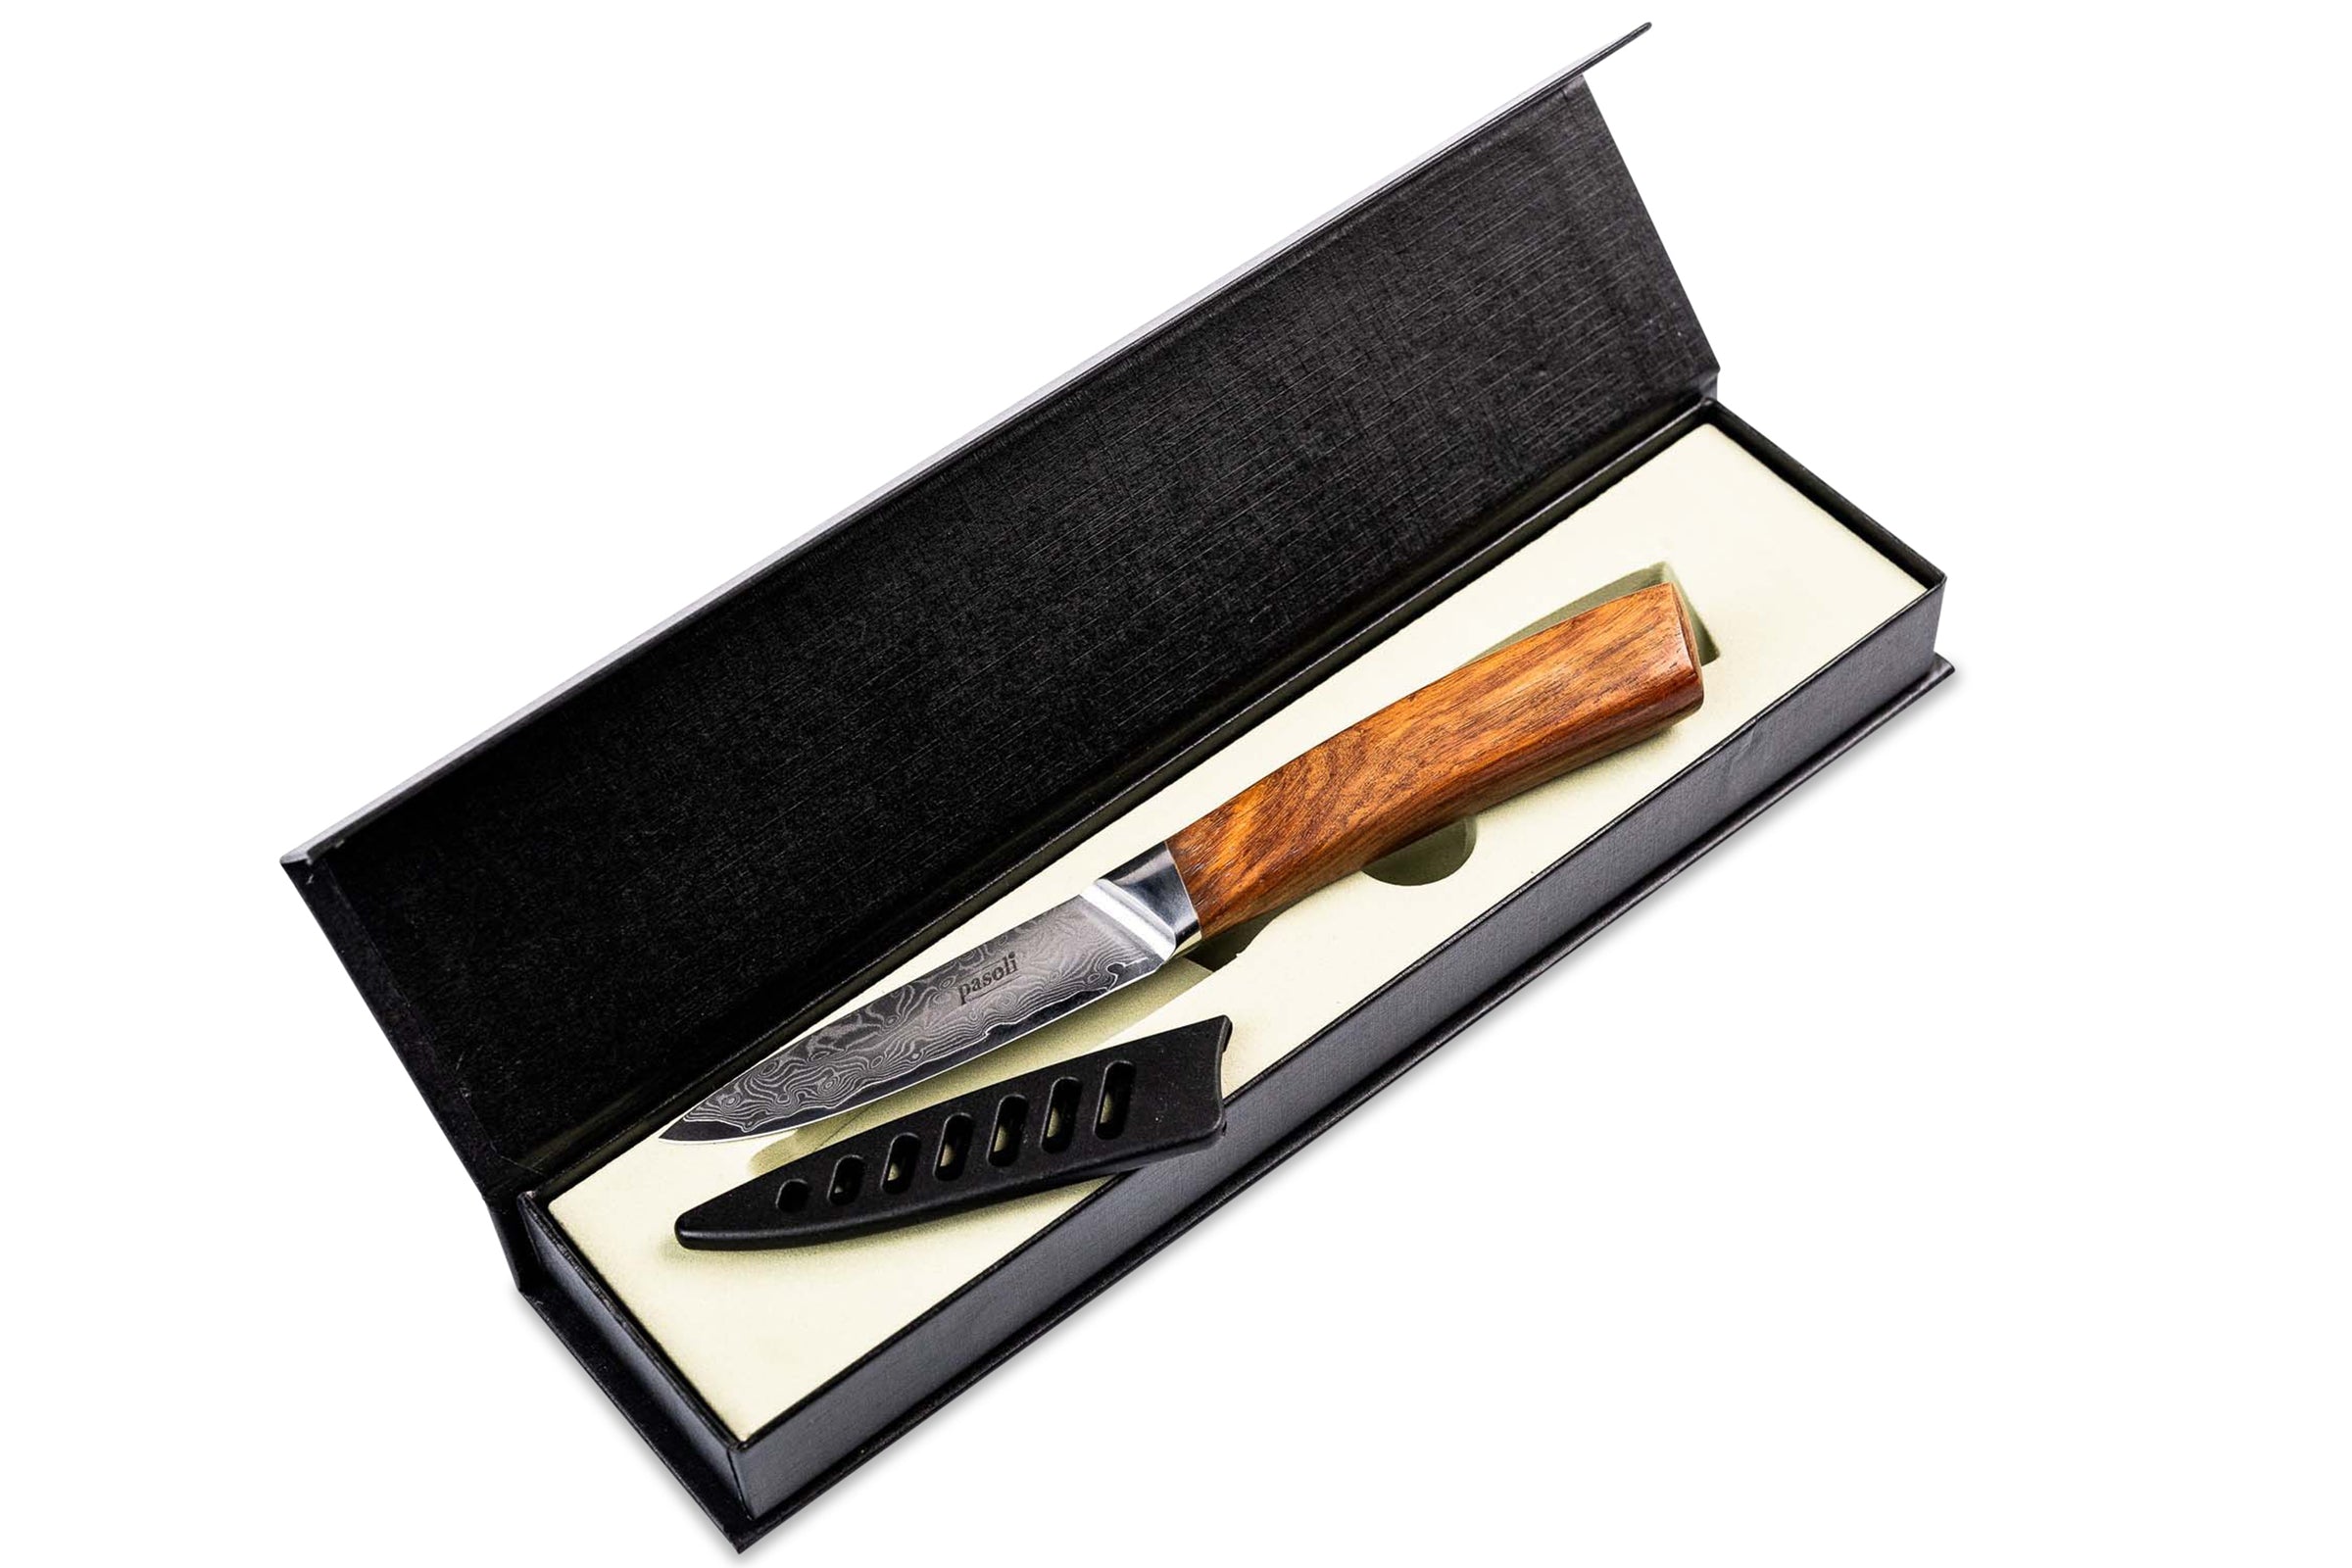 pasoli damask paring knife in elegant gift packaging including blade protection.